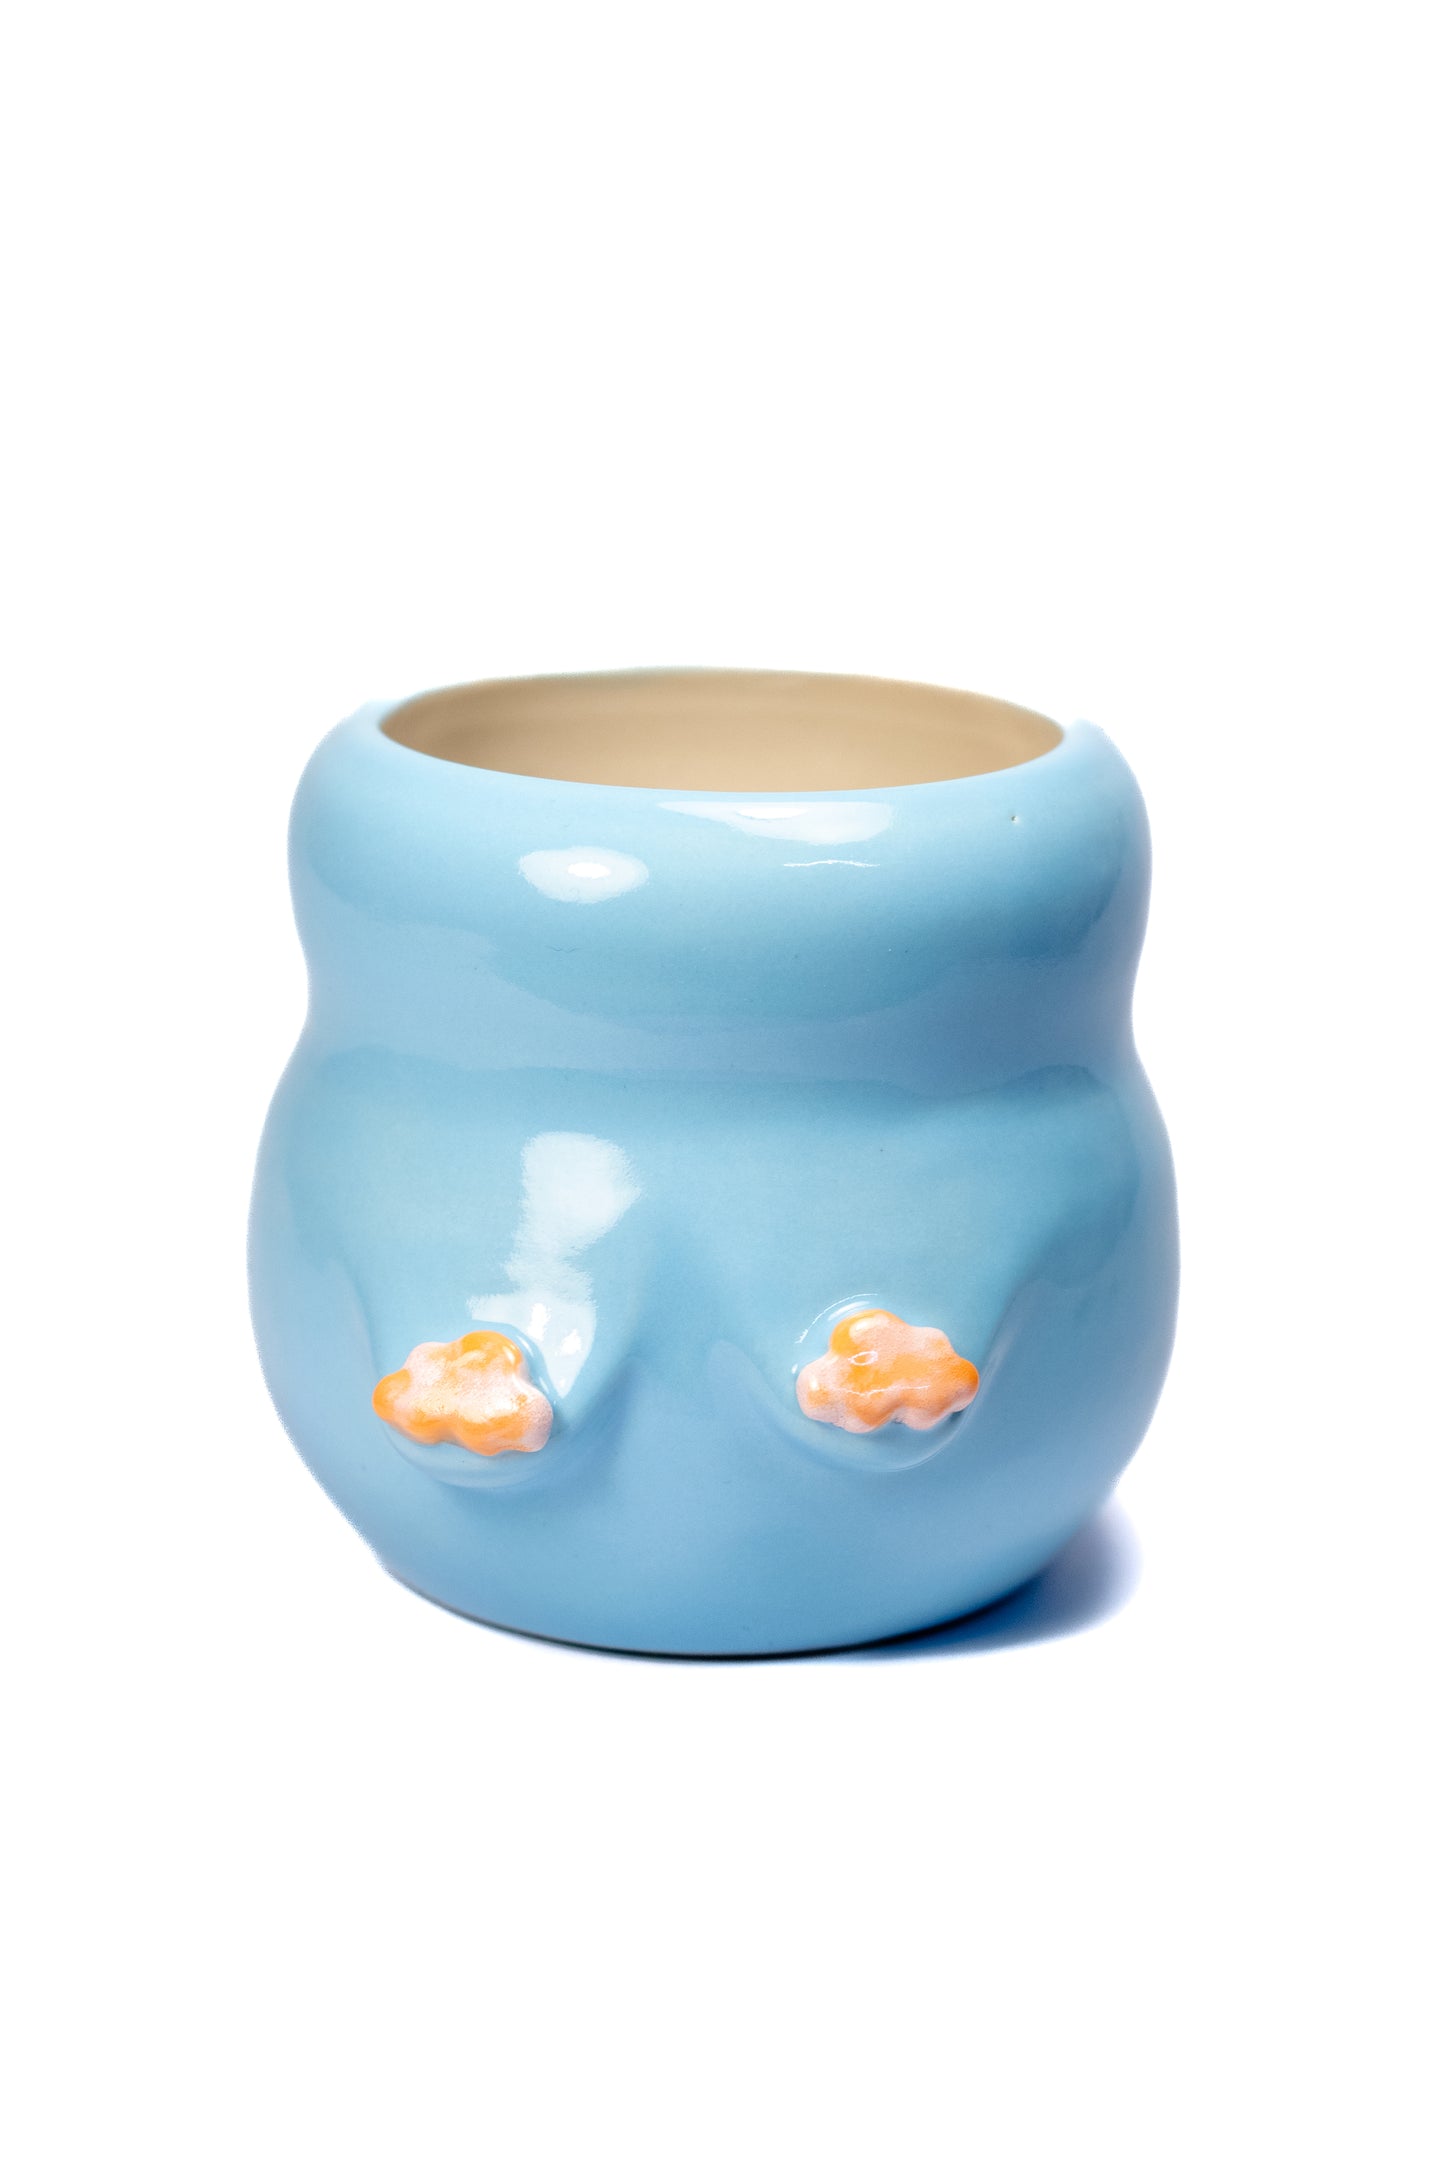 cloudy boobs cup